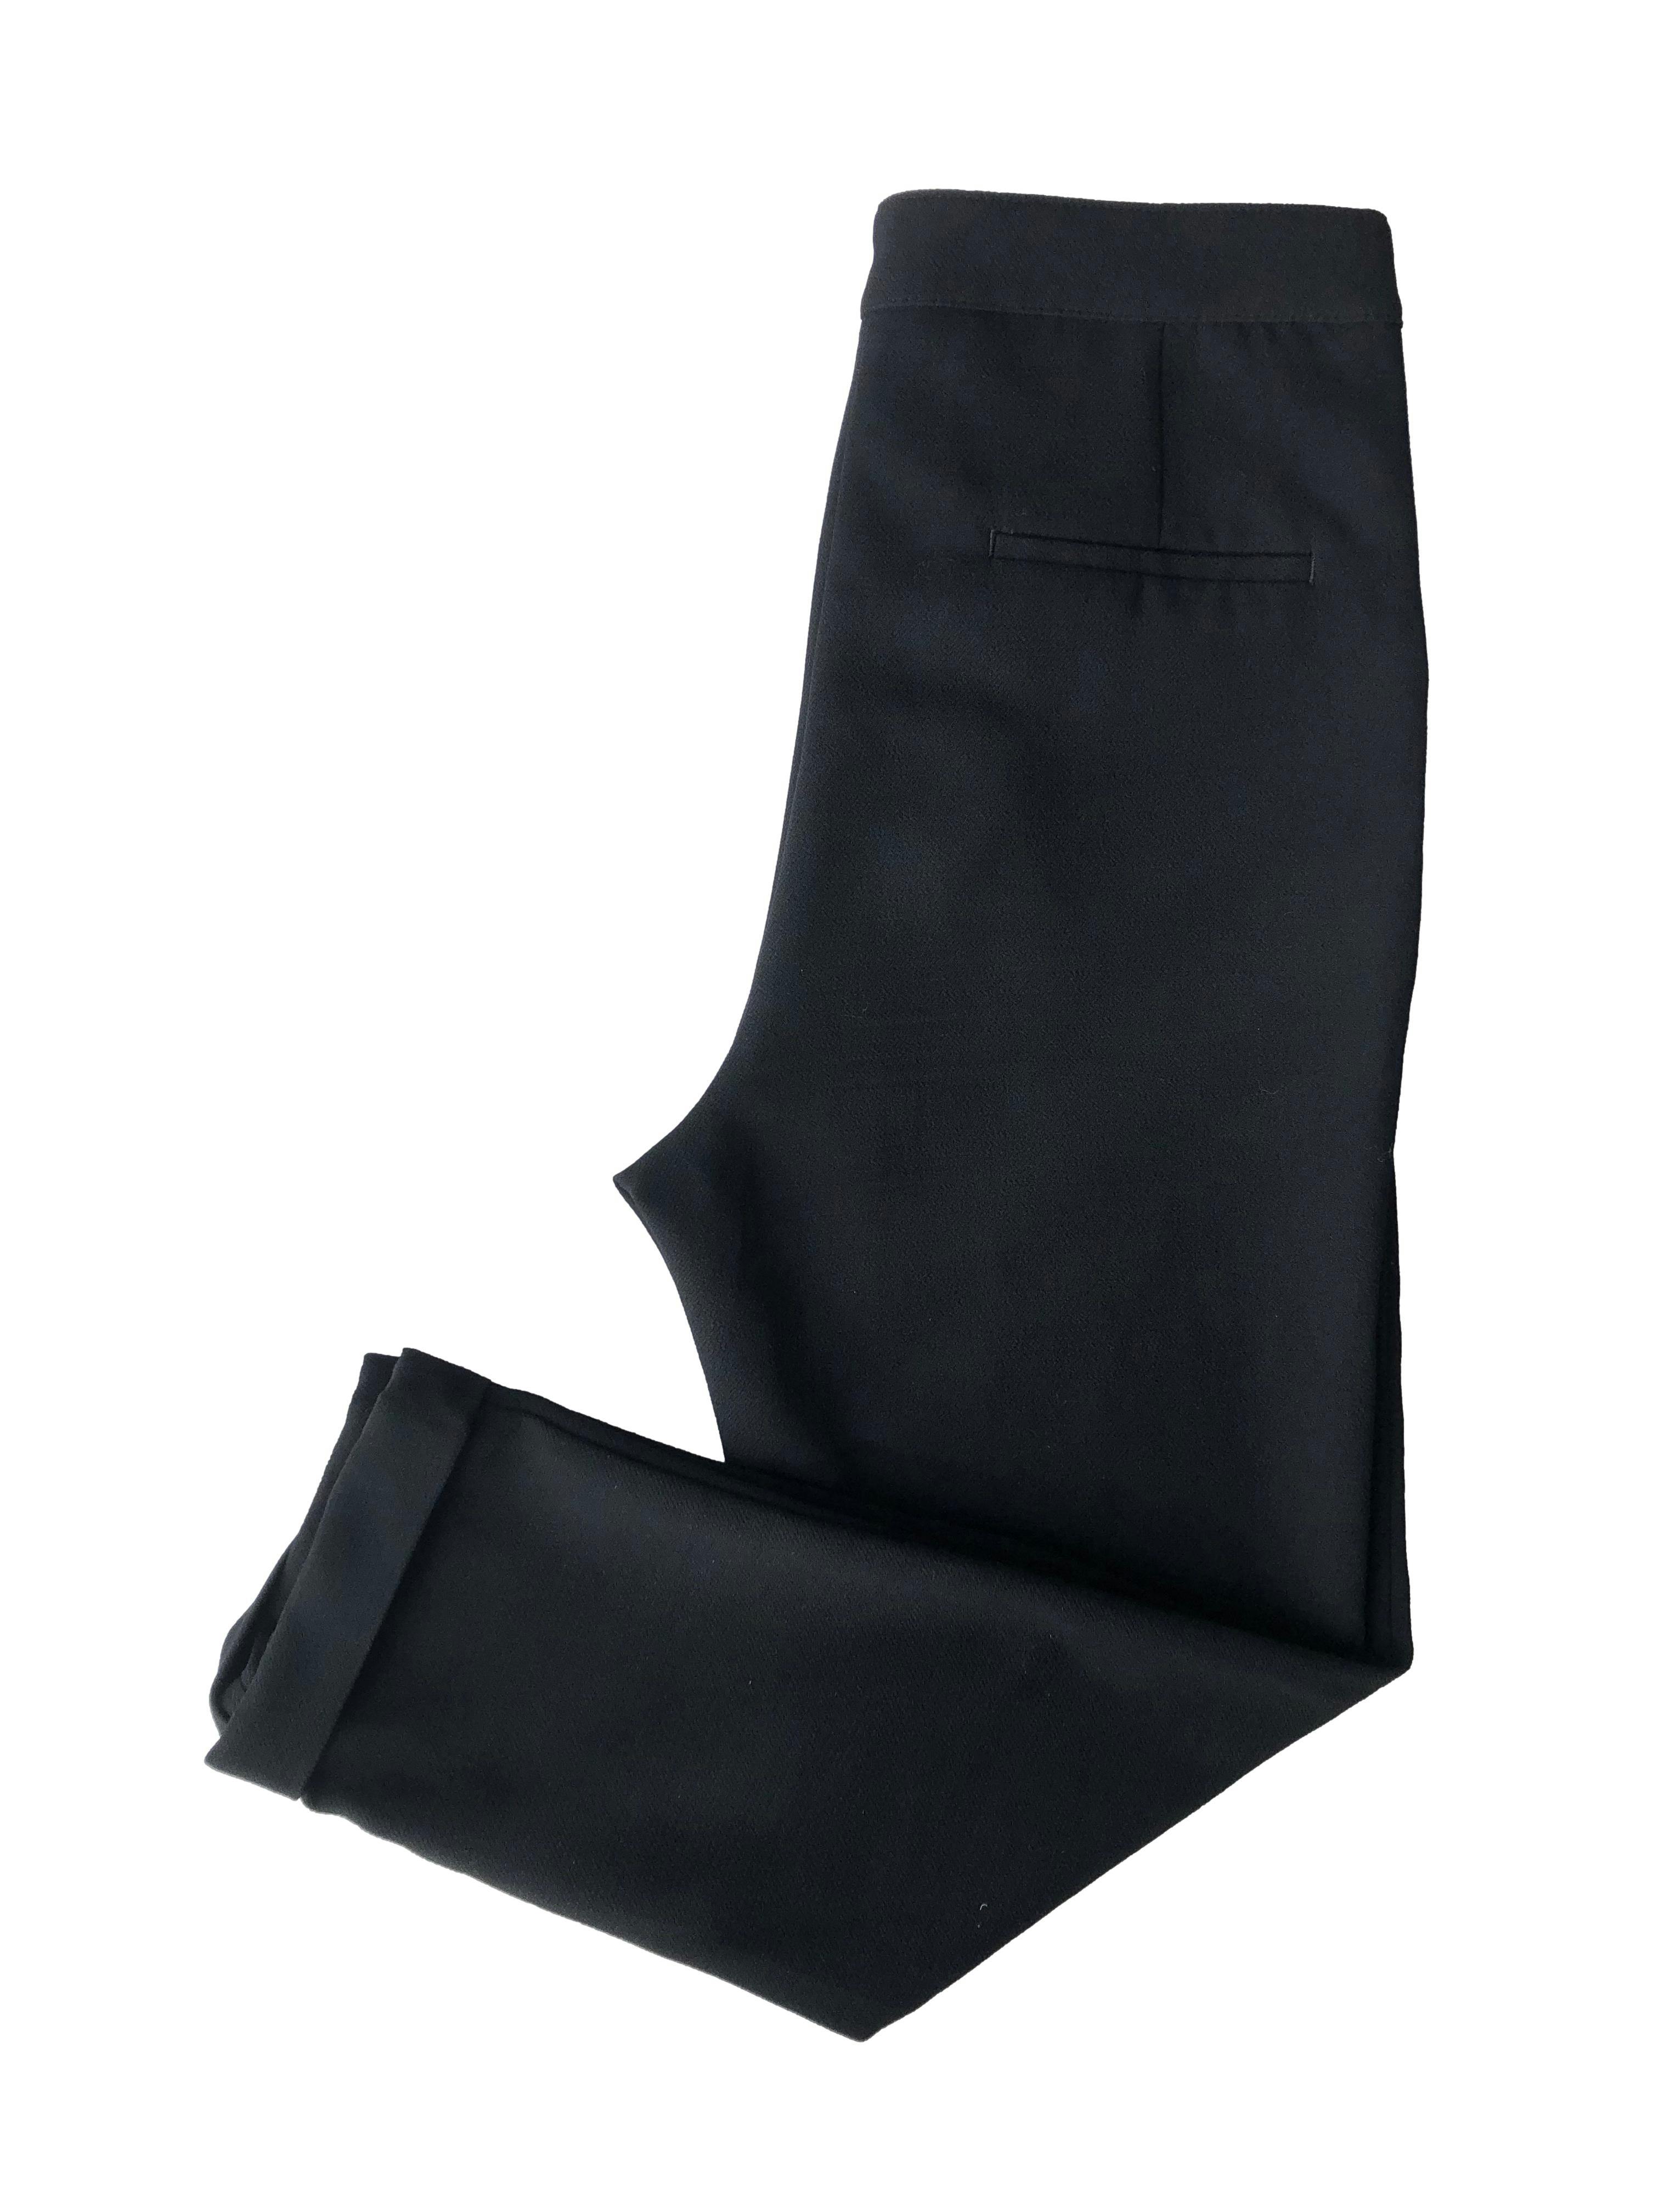 Pantalón negro Pull & Bear, corte slim con pinzas, bolsillos delanteros, falsos bolsillos posteriores y dobladillo en botapie. Cintura 72cm Tiro 30cm Largo 92cm.